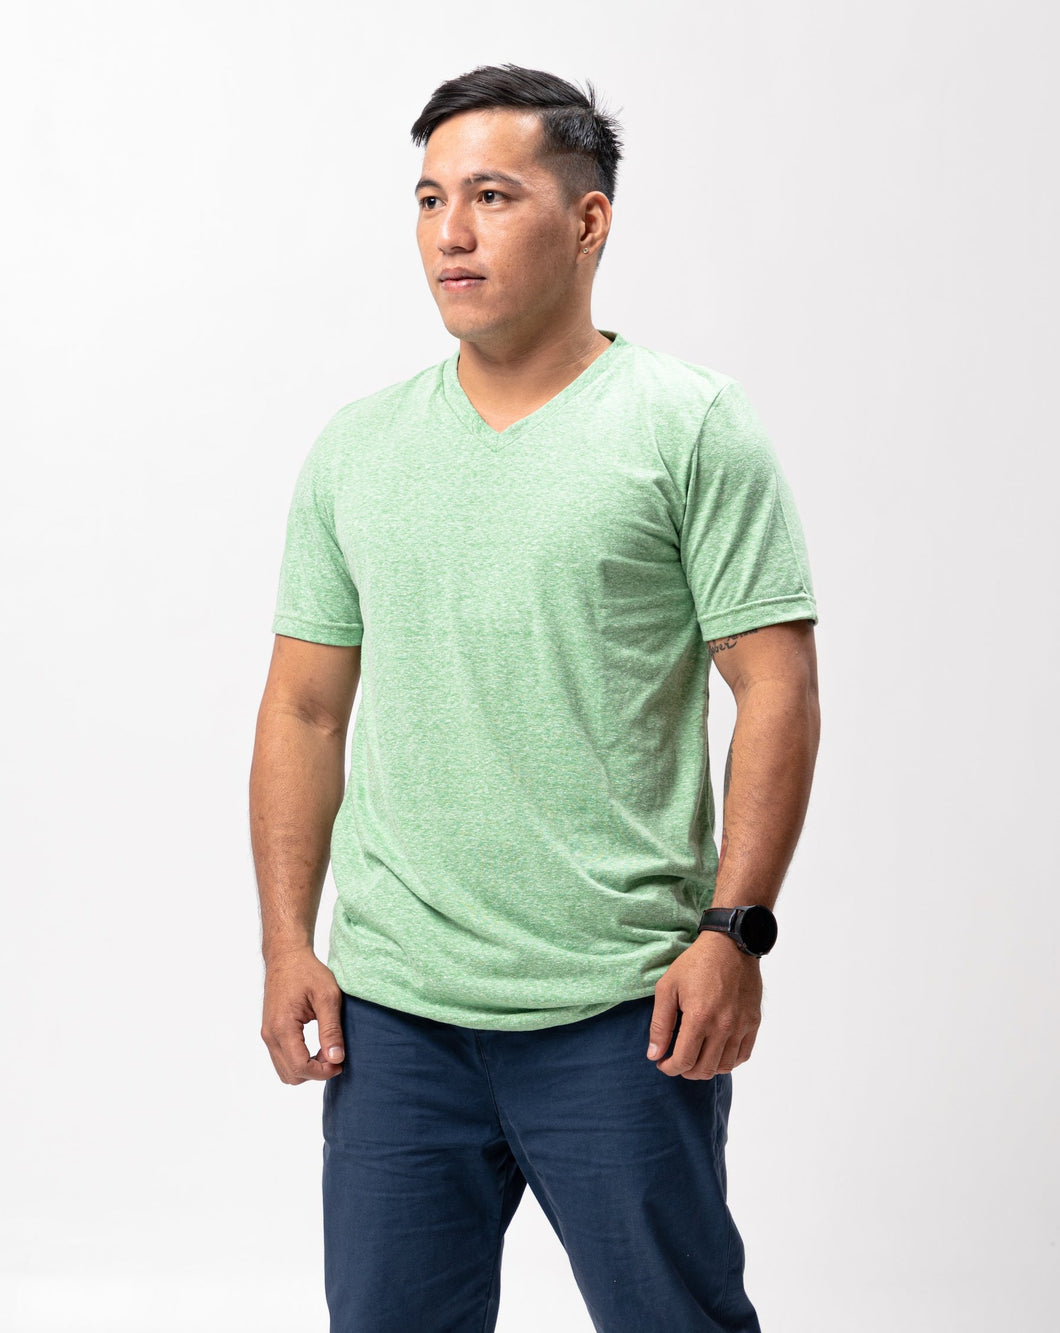 Emerald Green Polyside Cotton Blue Plain Unisex T-Shirt